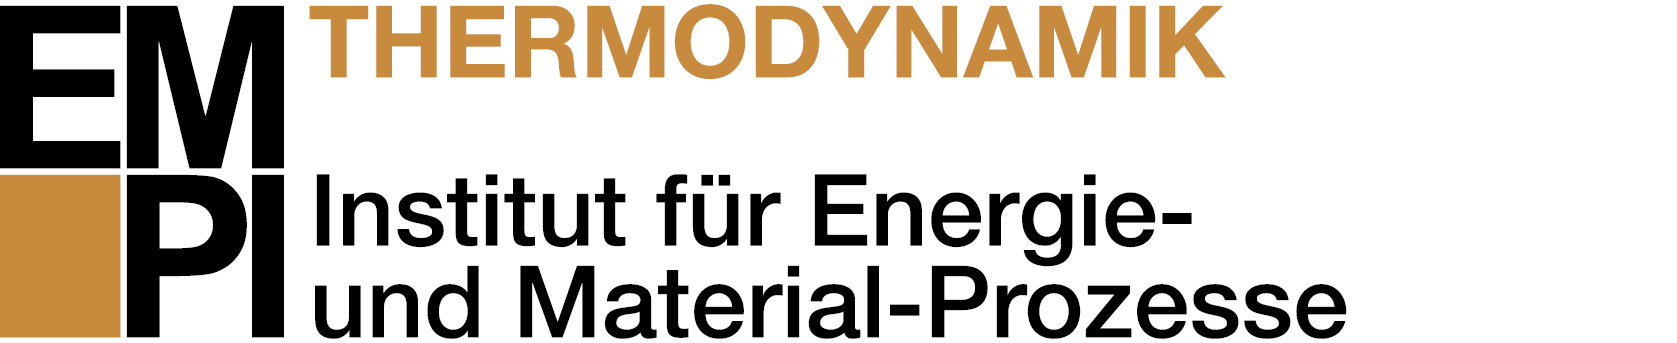 Logo EMPI Thermodynamik